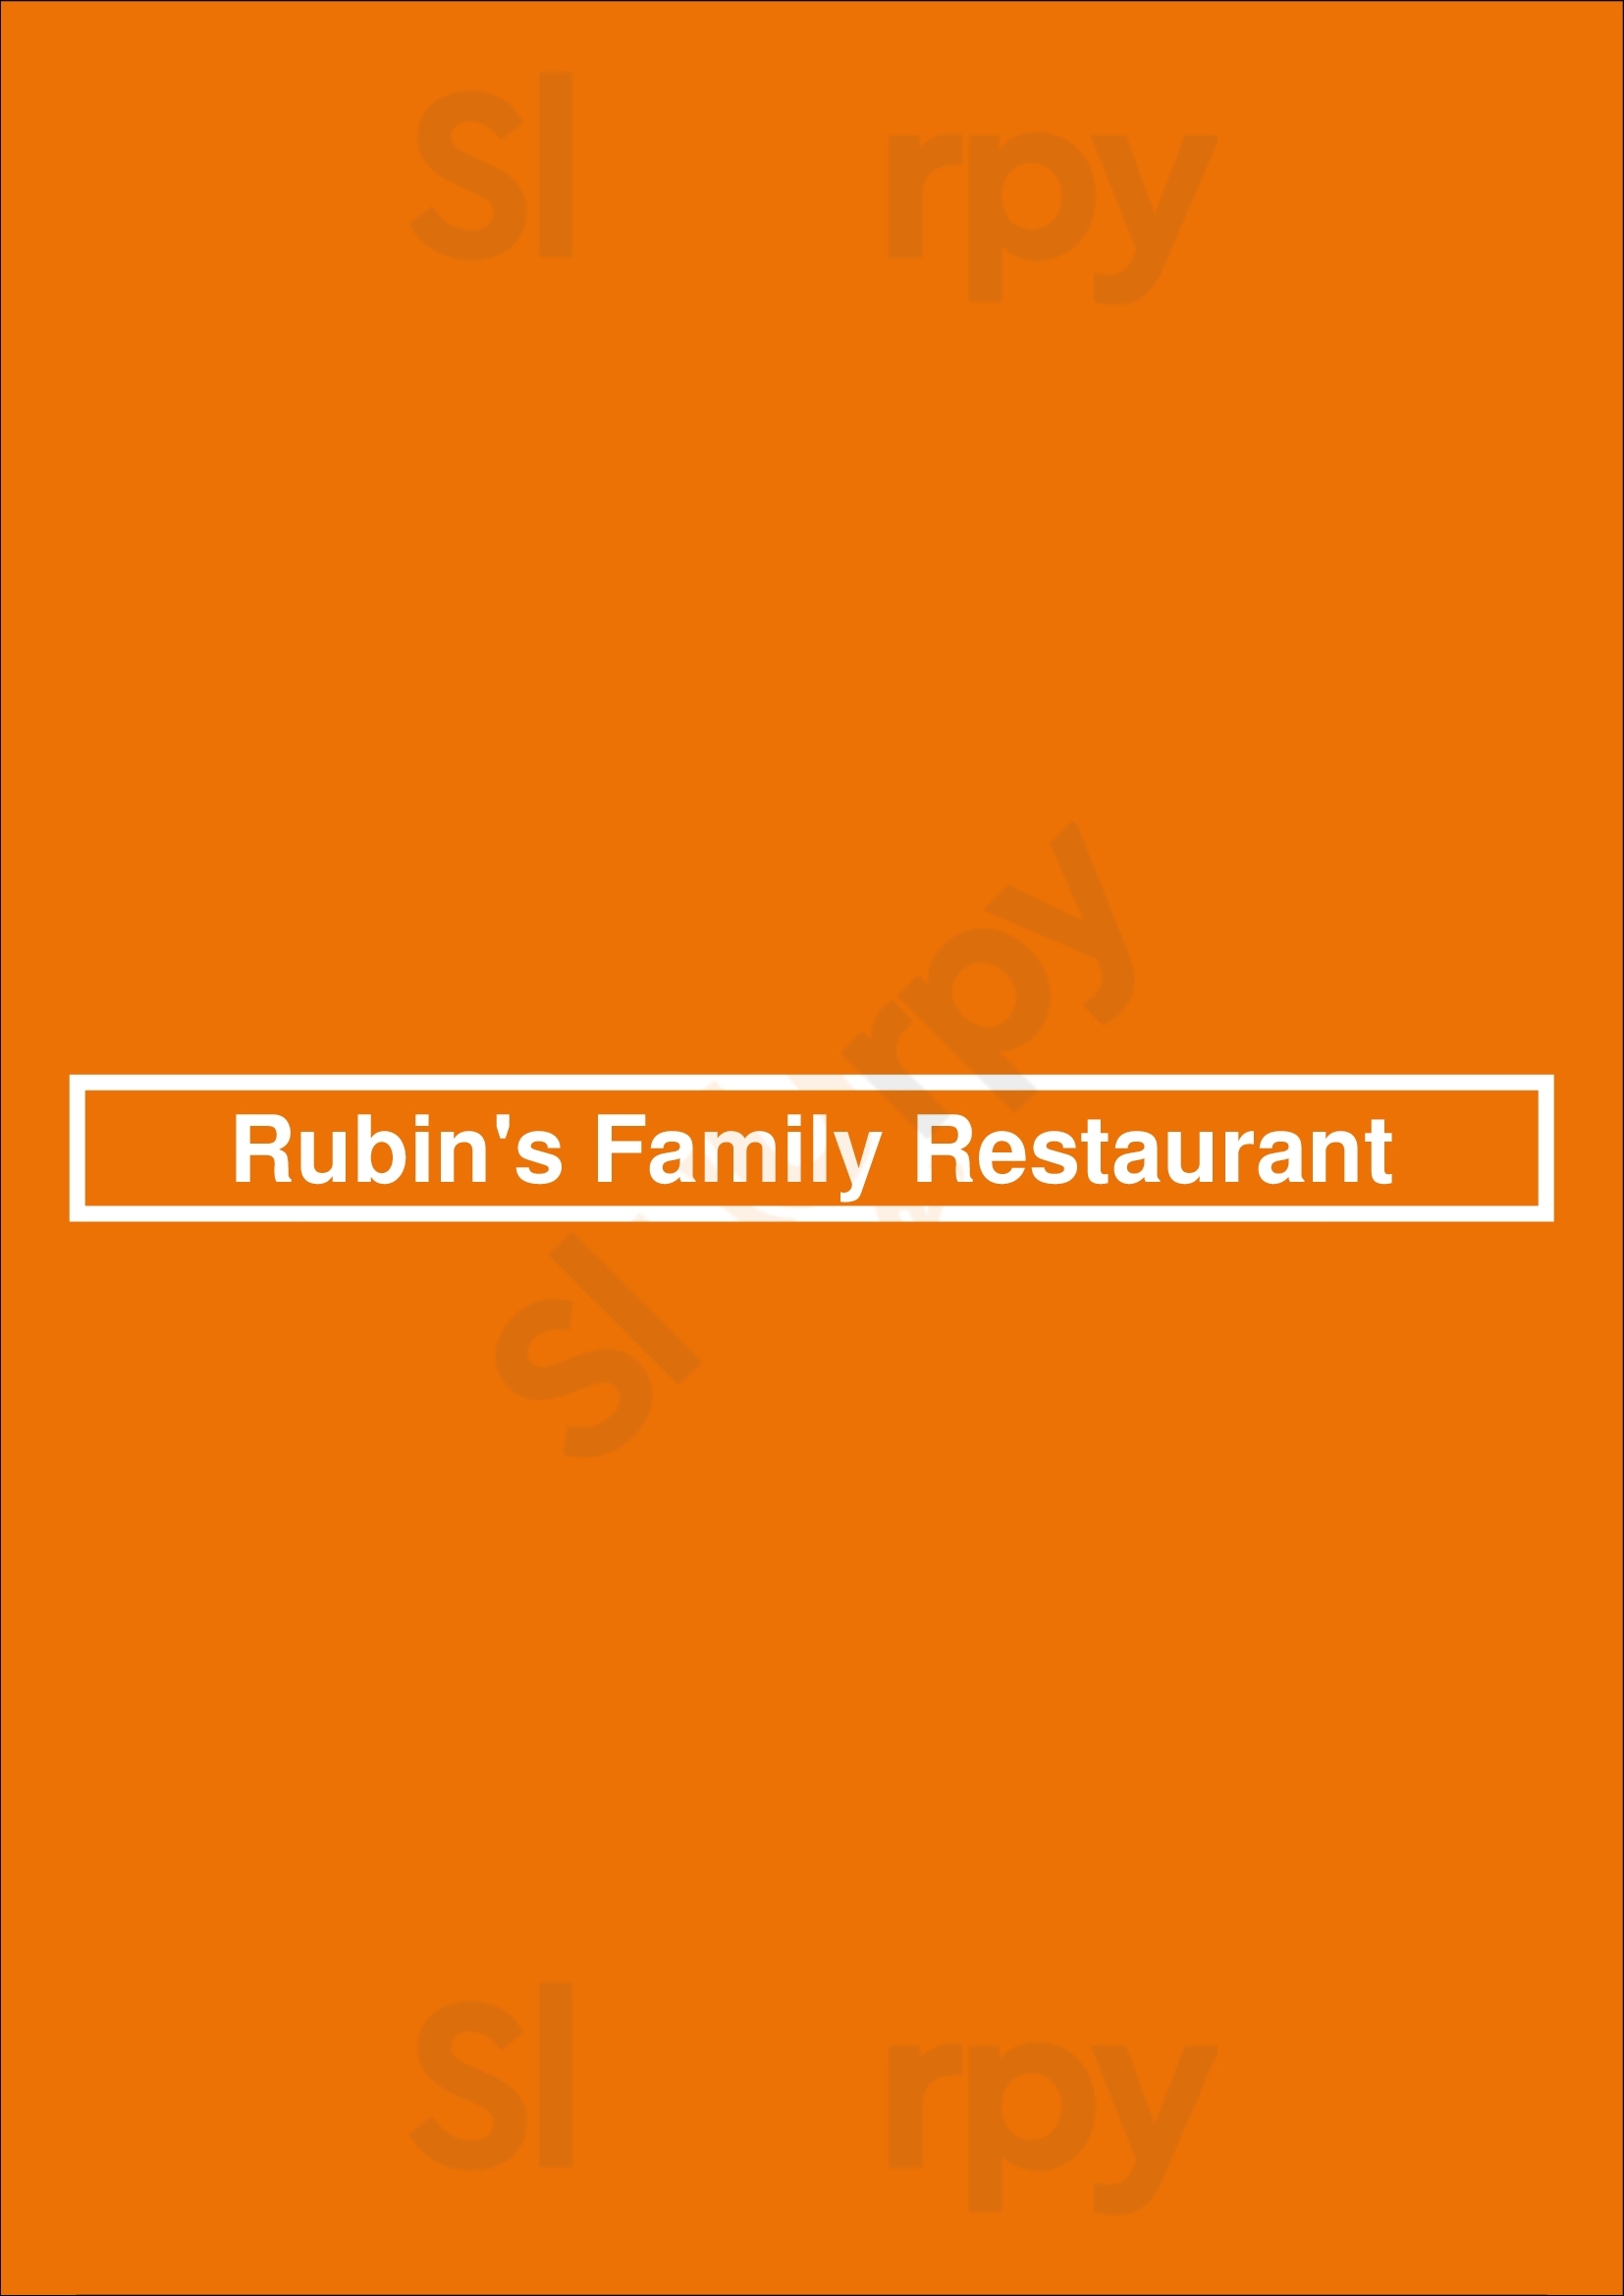 Rubin's Family Restaurant Cleveland Menu - 1